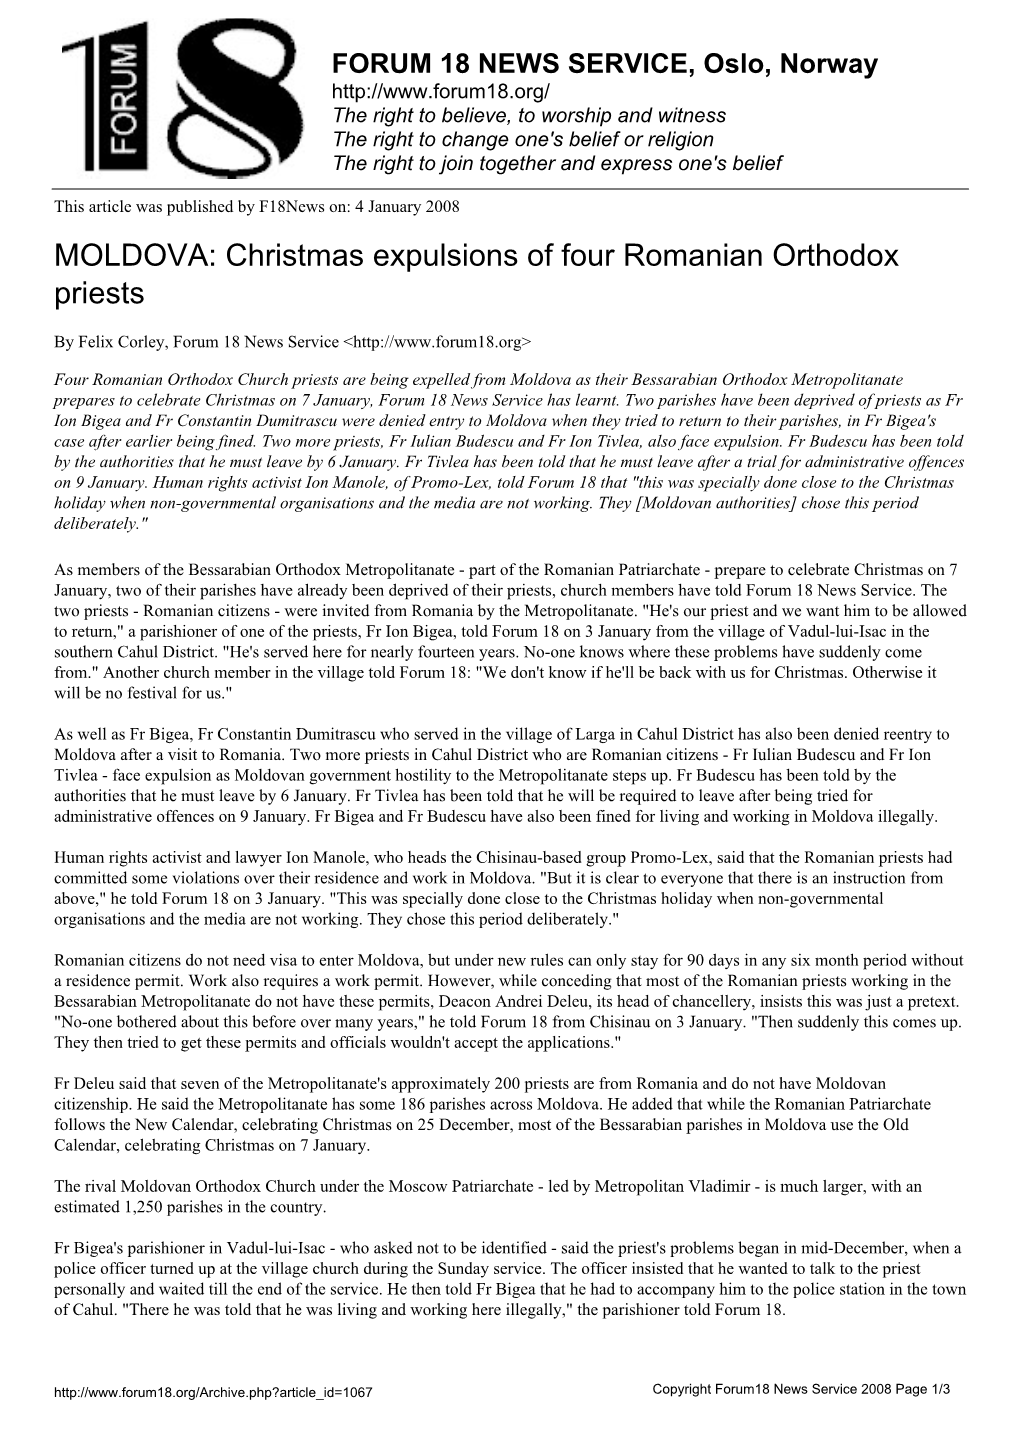 MOLDOVA: Christmas Expulsions of Four Romanian Orthodox Priests